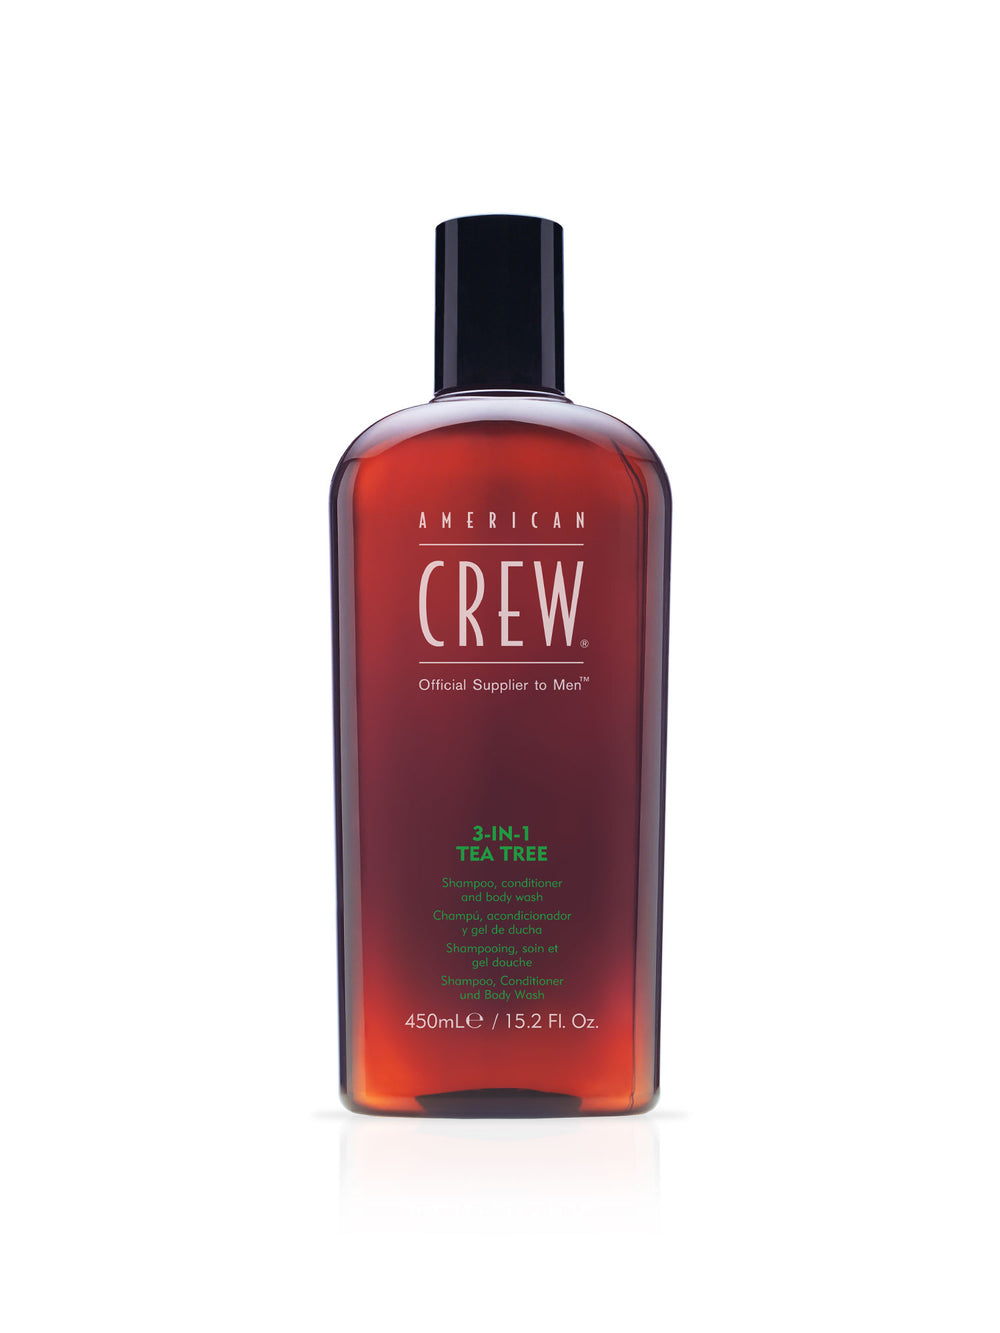 american crew szampon 3 in 1